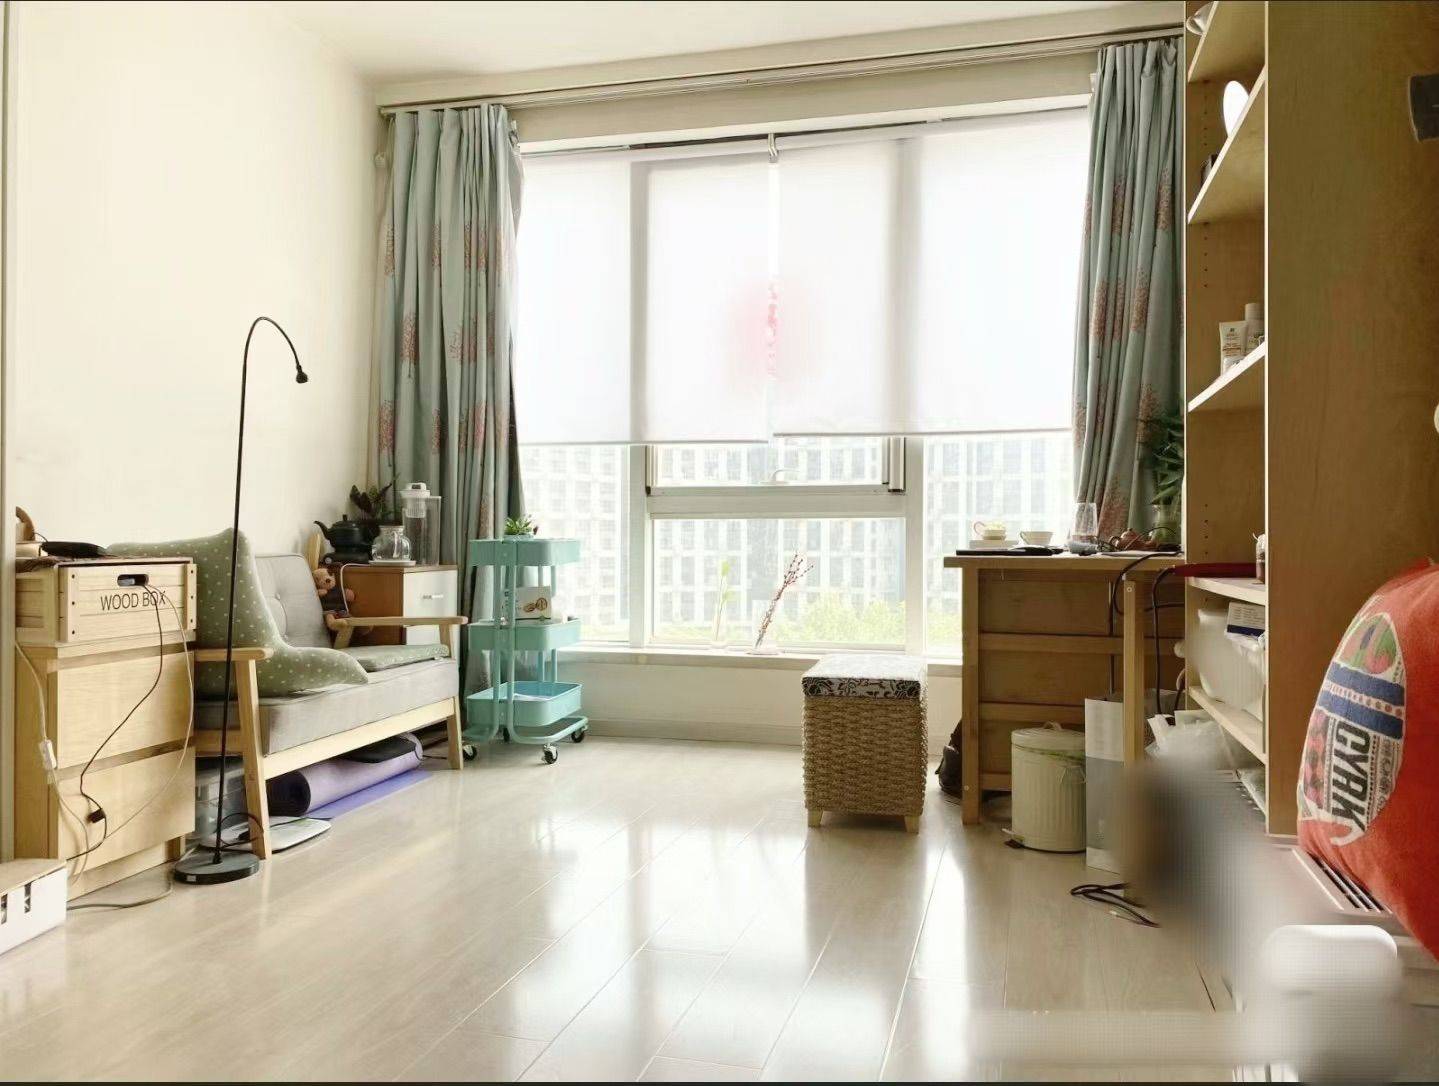 Beijing-Chaoyang-Cozy Home,Clean&Comfy,No Gender Limit,Hustle & Bustle